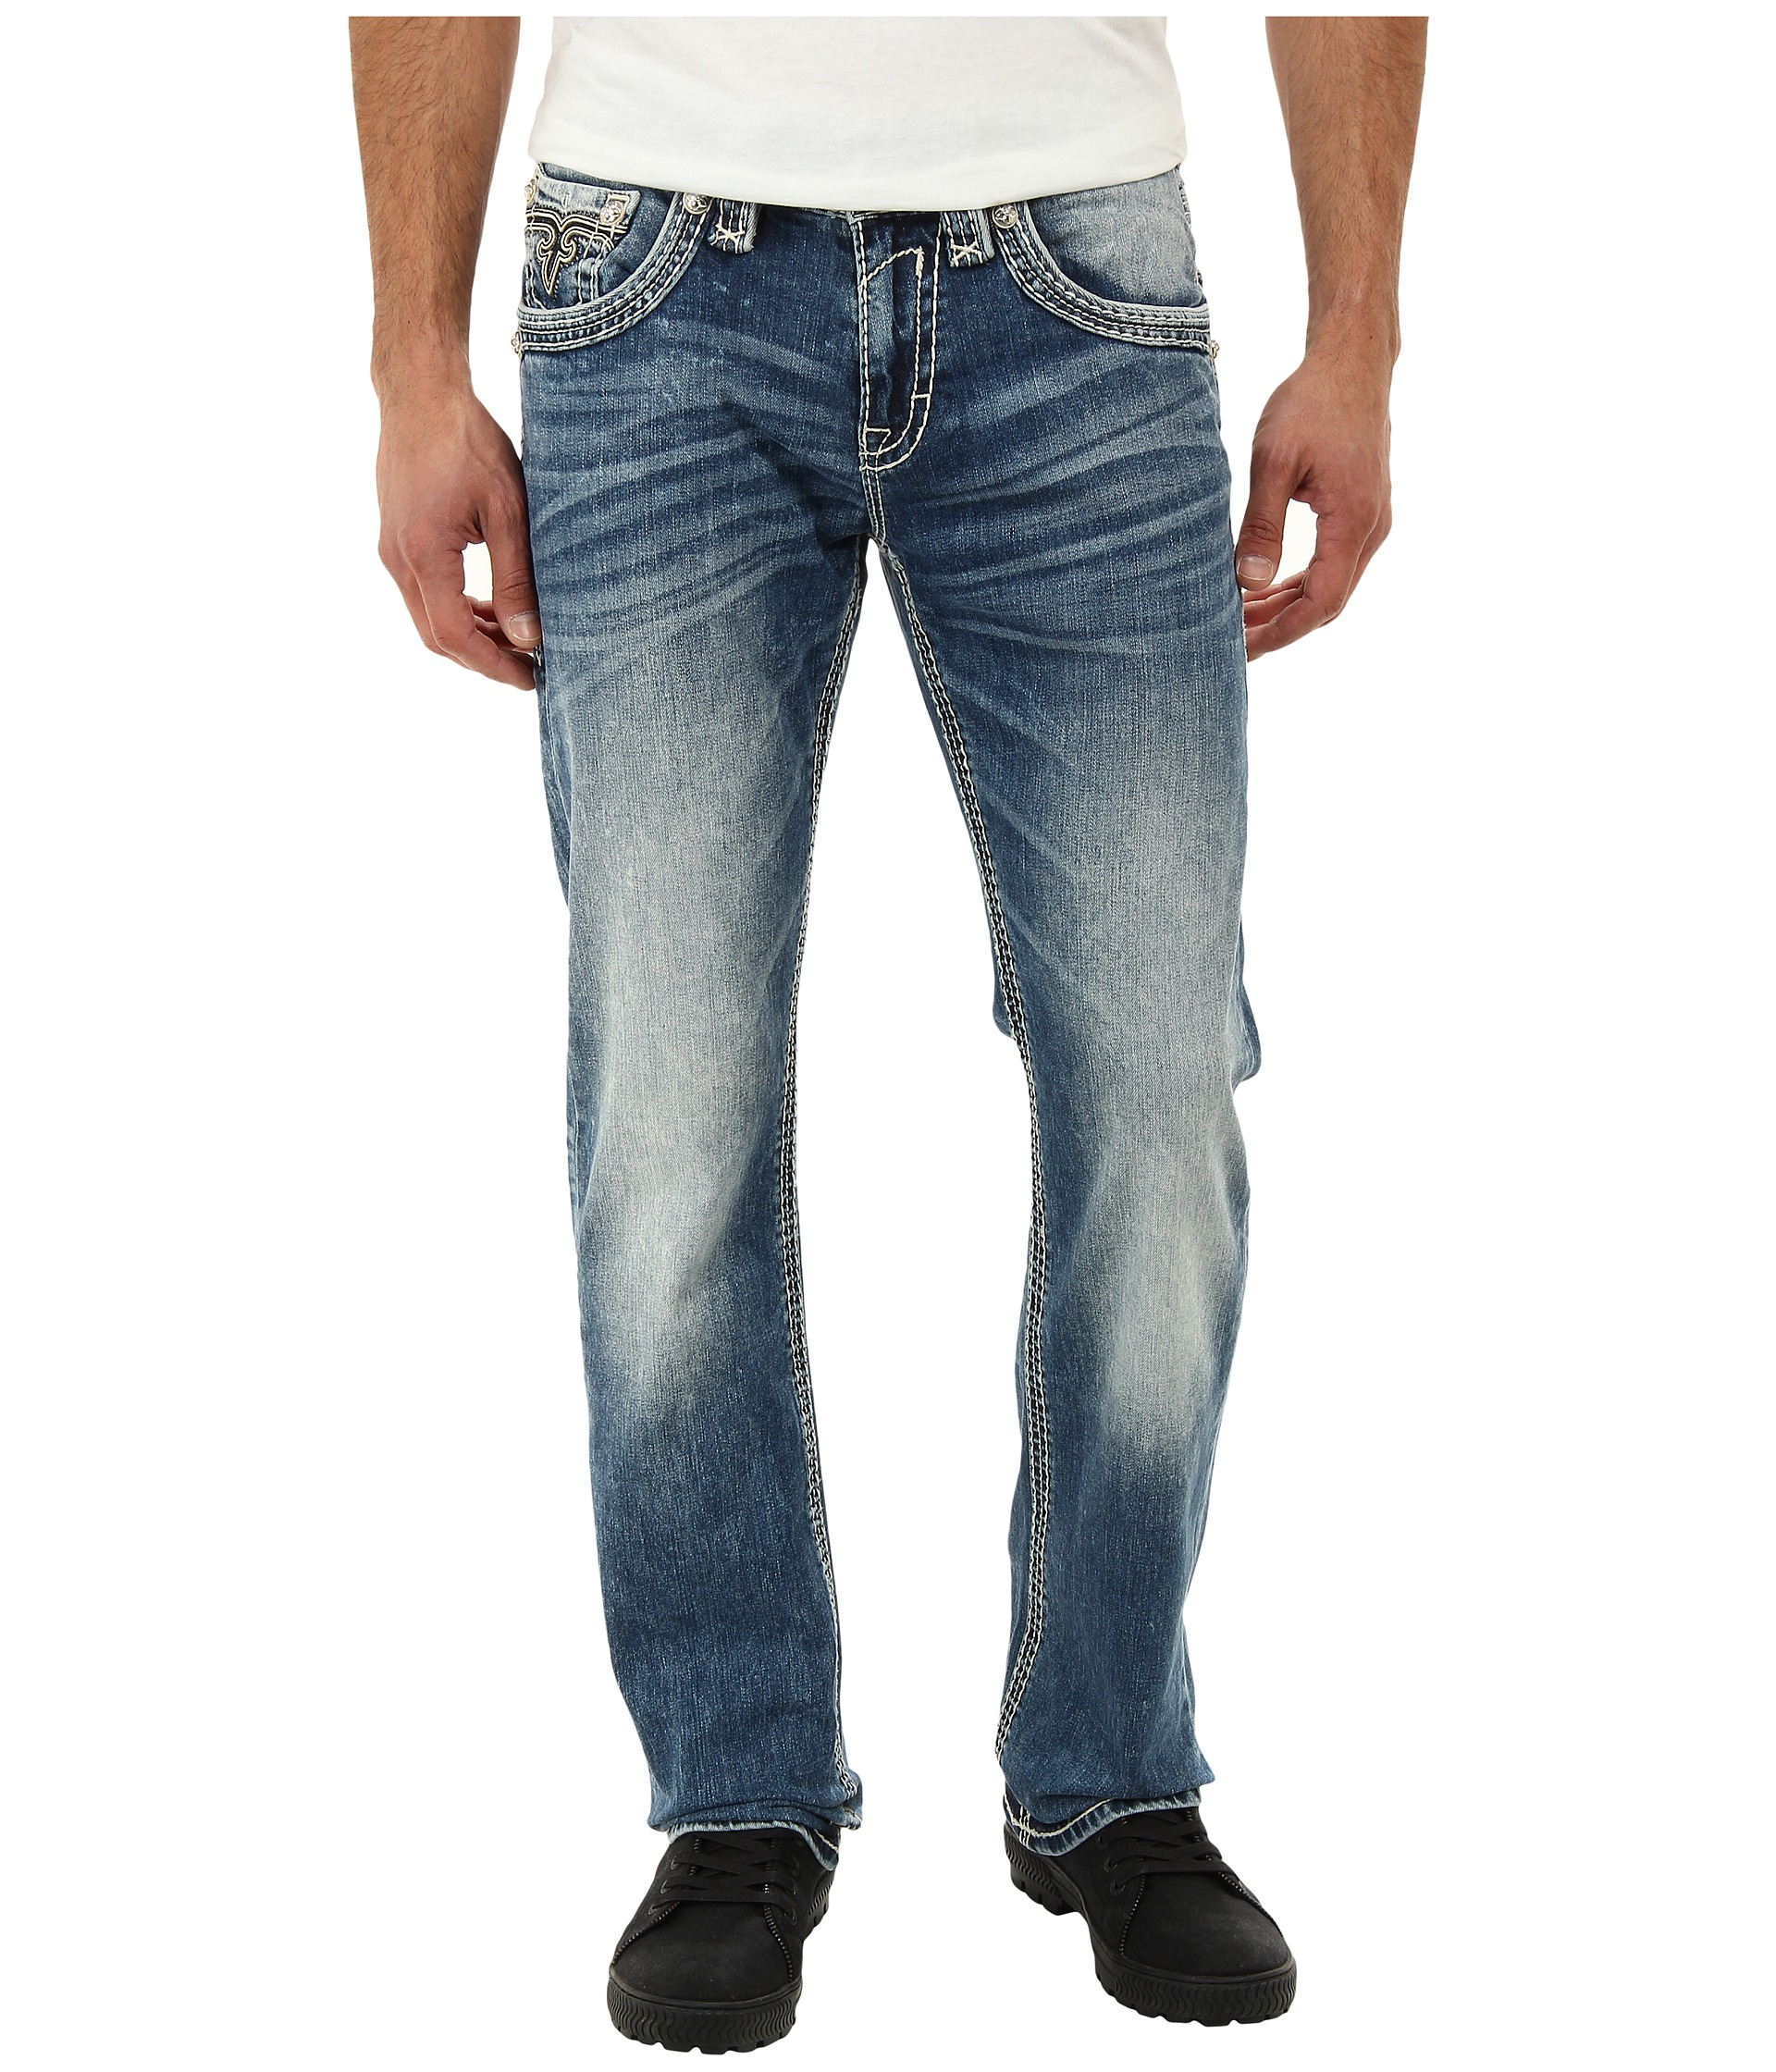 Lyst - Rock Revival Castor Bootcut Jeans in Blue for Men